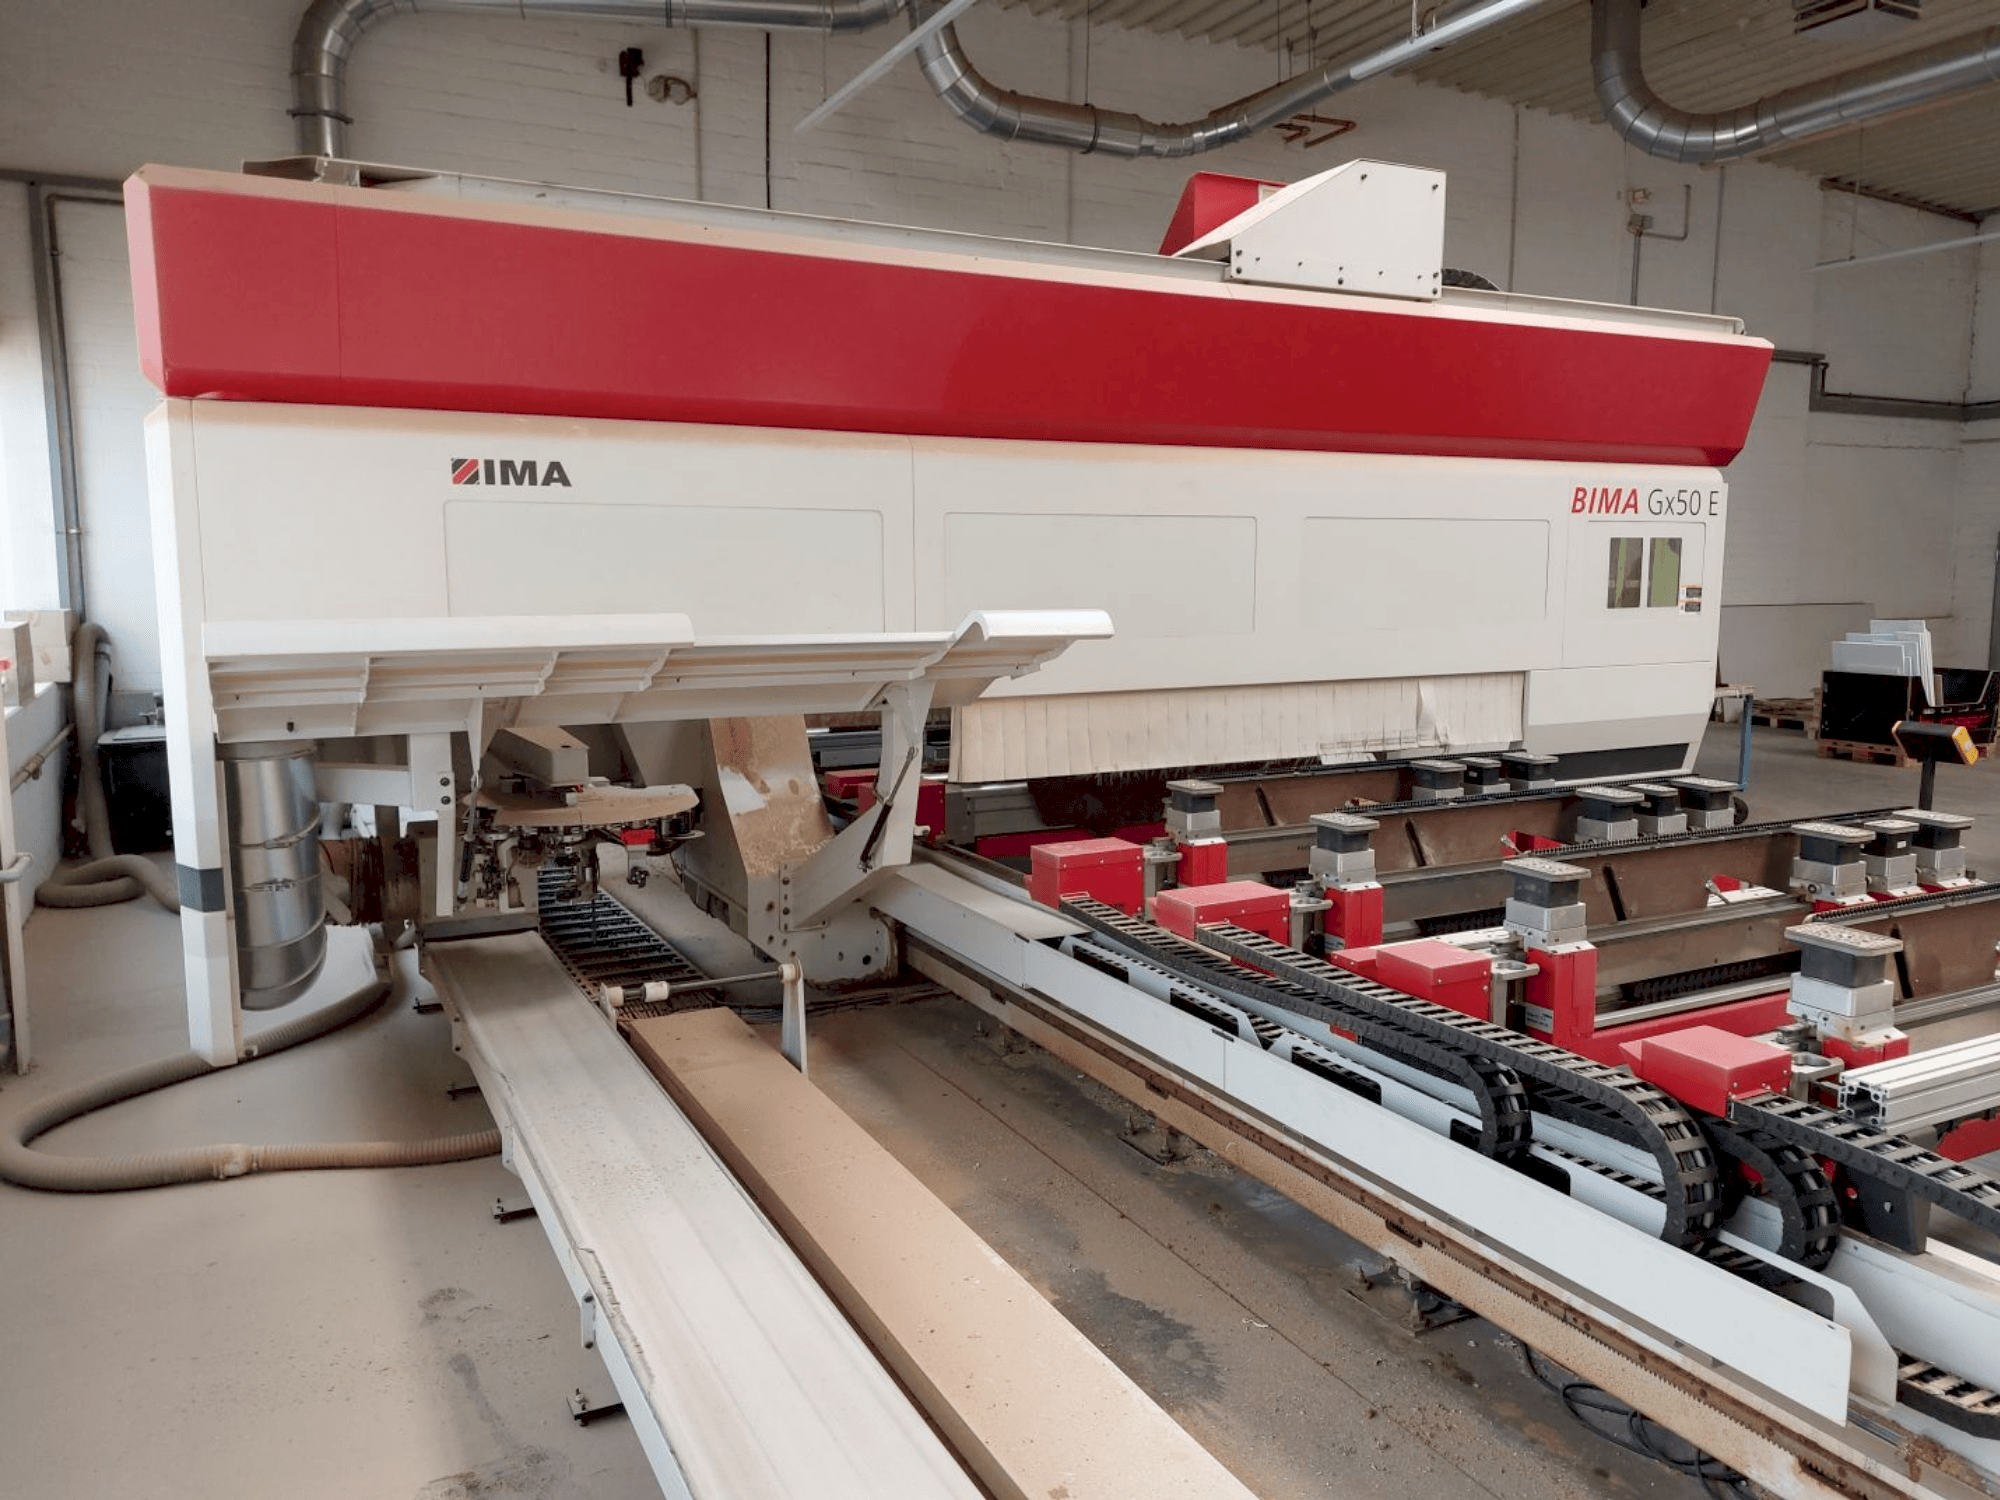 IMA BIMA Gx50 E 160/630 CNC Processing Center-maskinen framifrån